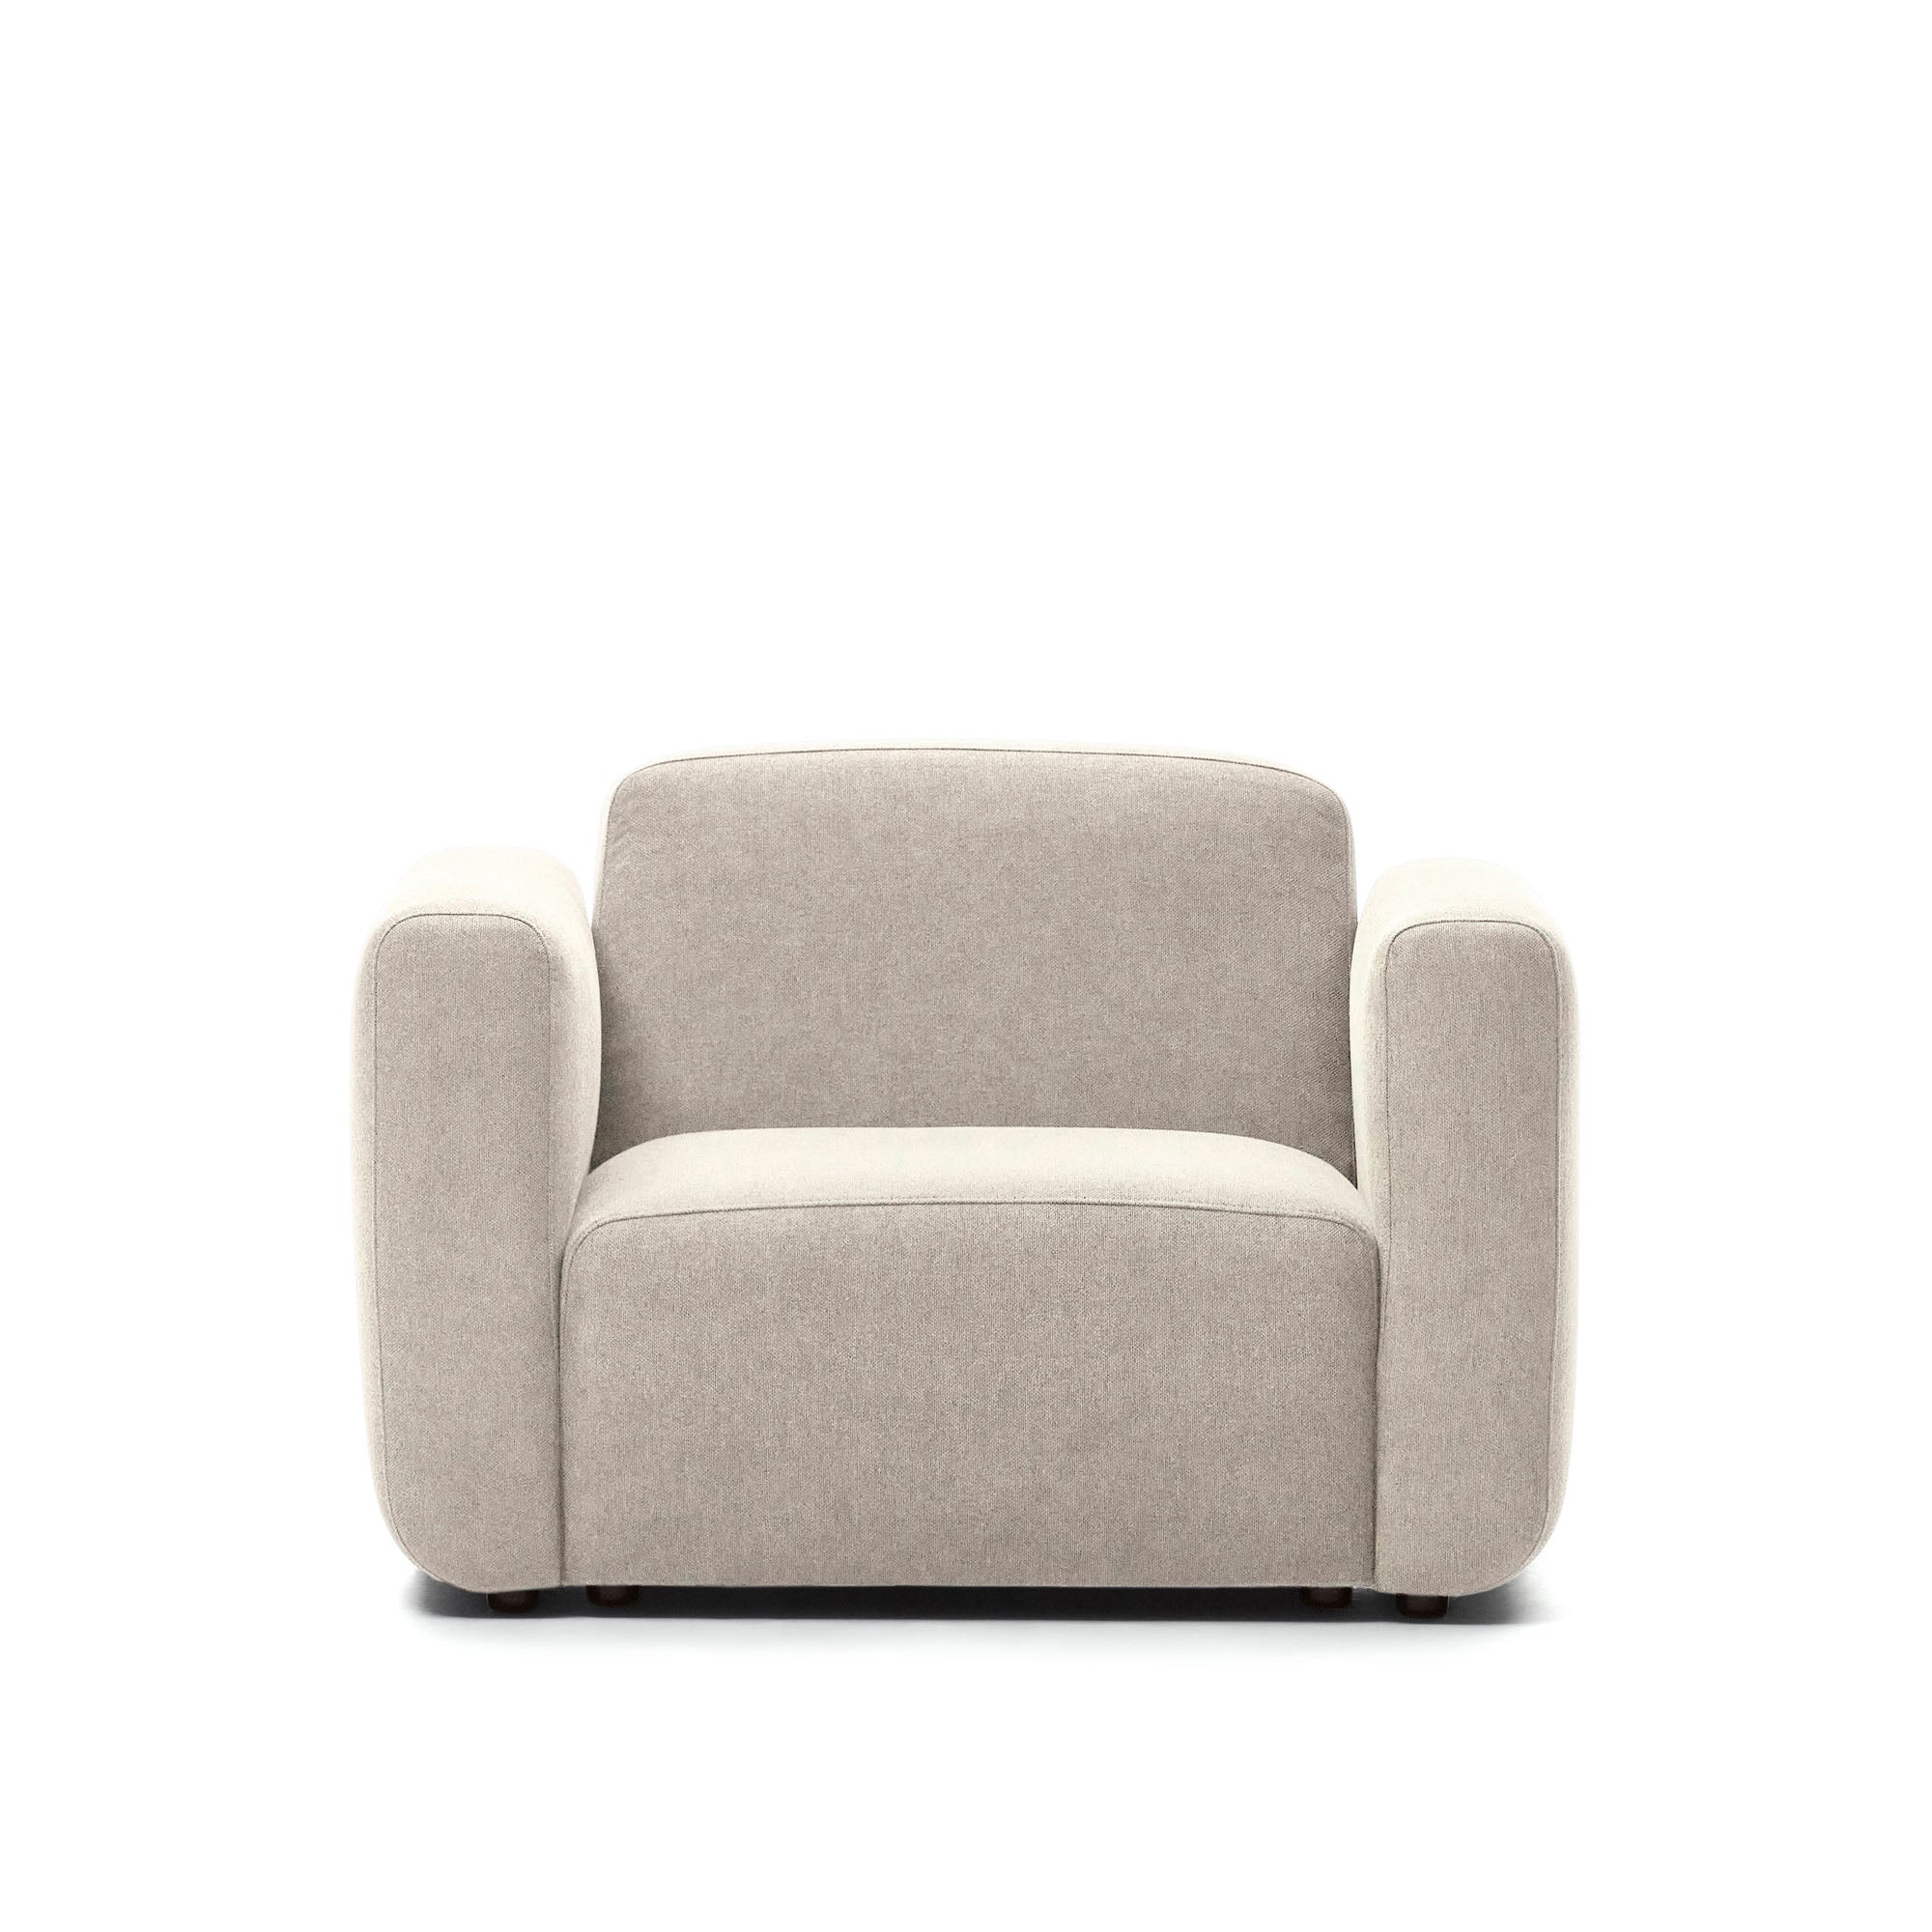 Neom modular armchair in beige